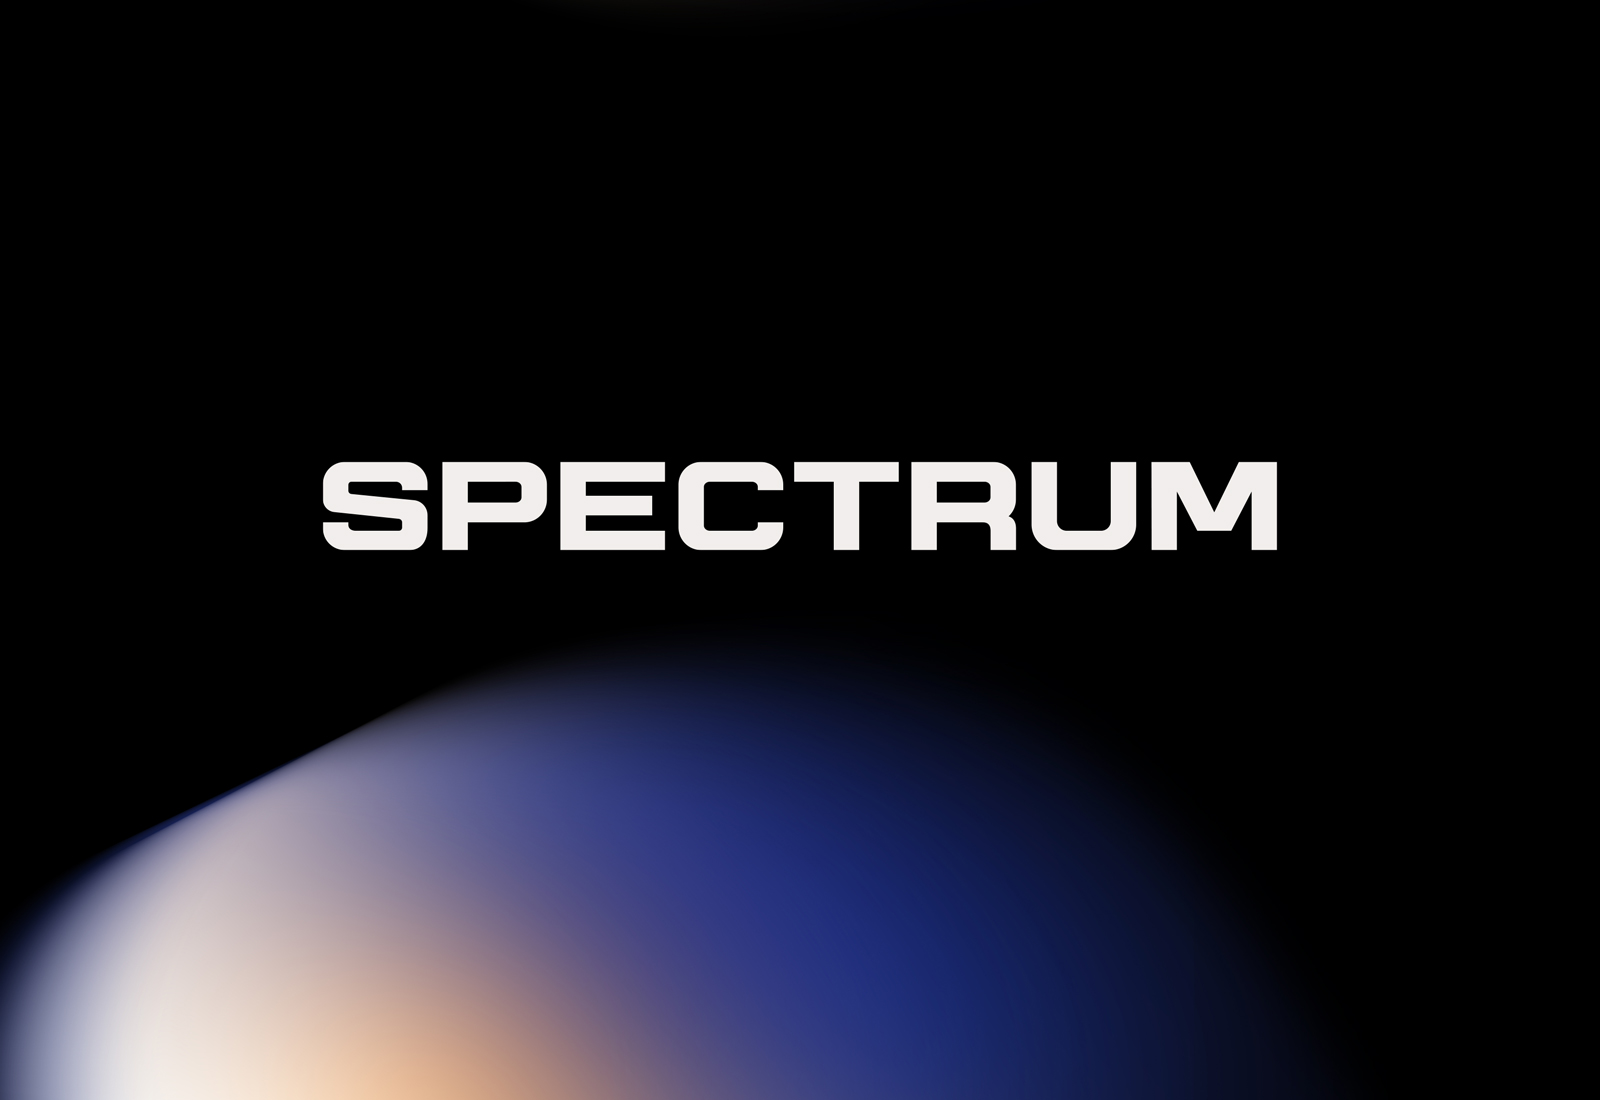 Spectrum welding logo and brand identity design